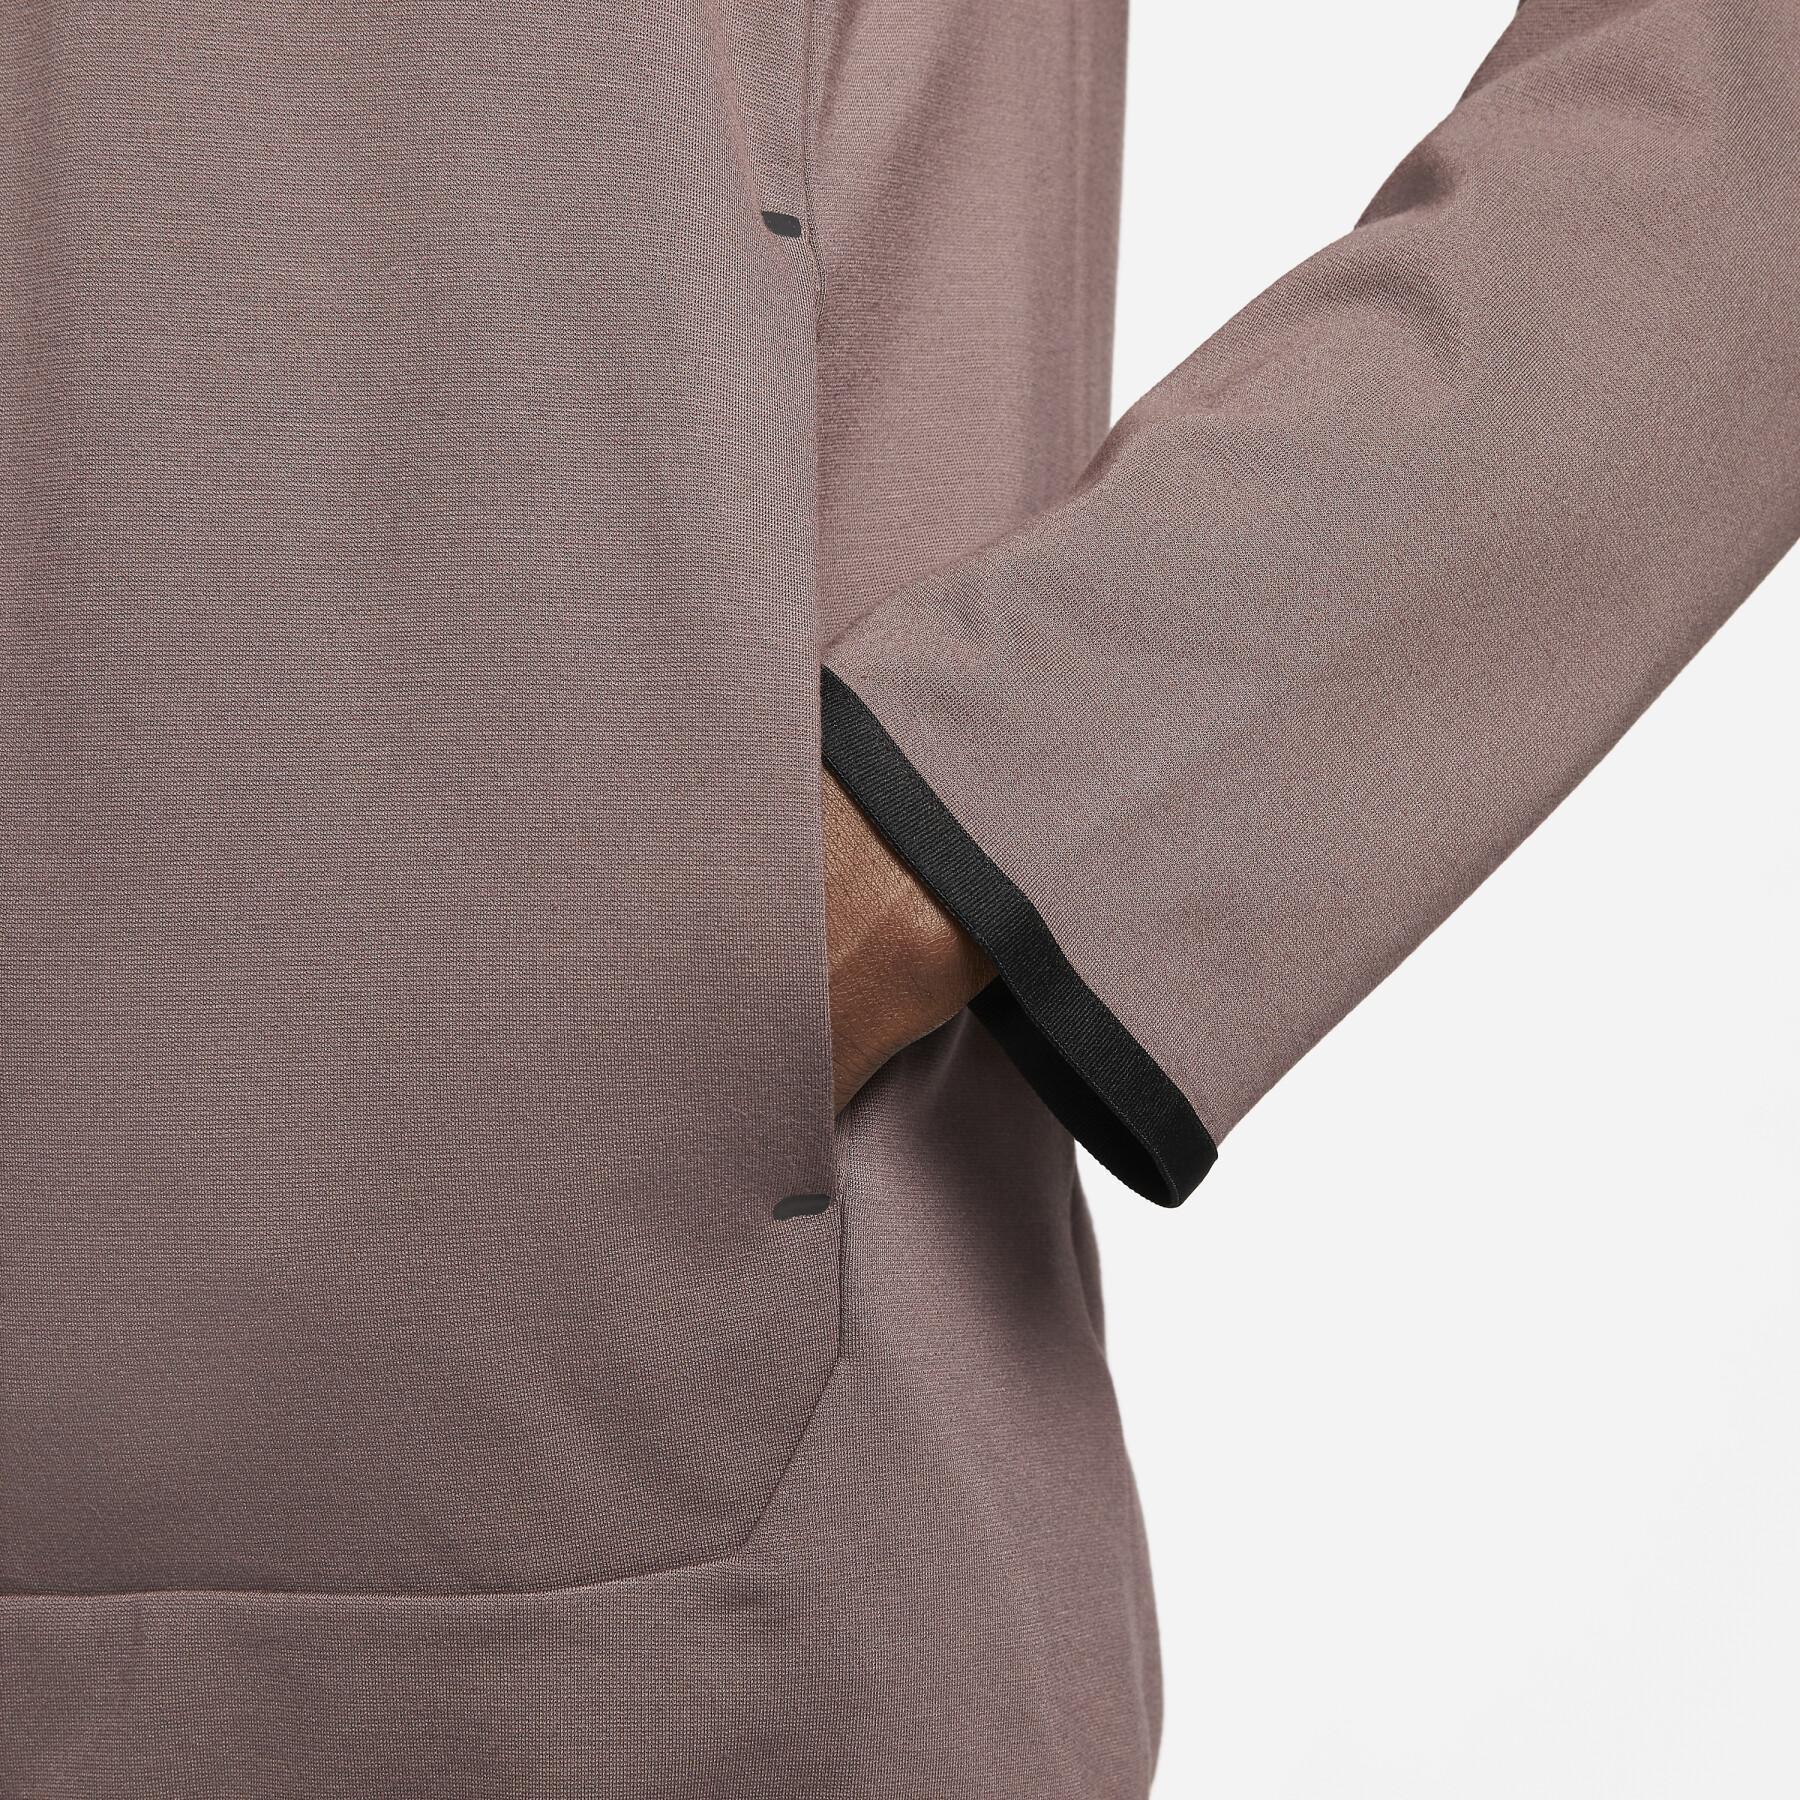 Full zip tracksuit jacket Nike Tech Lghtwht